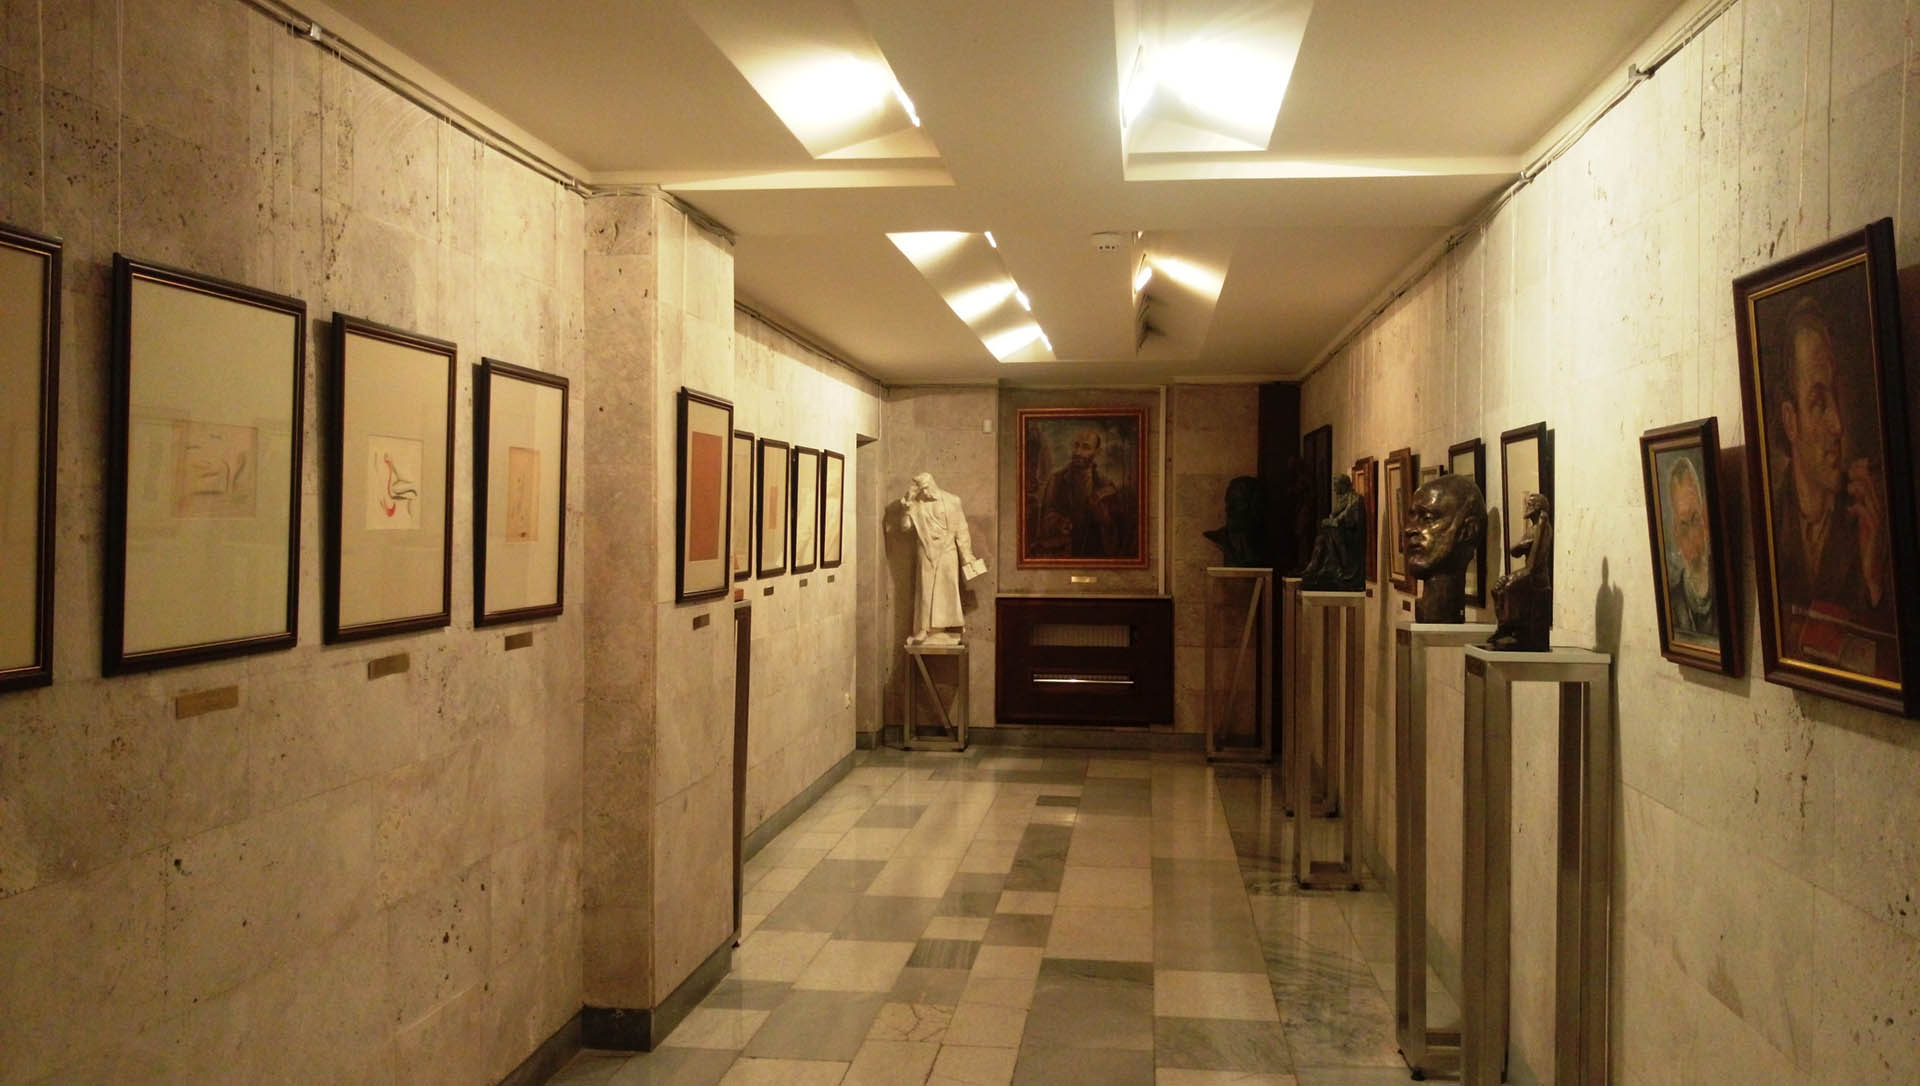 The Ervand Kochar Museum of Armenia